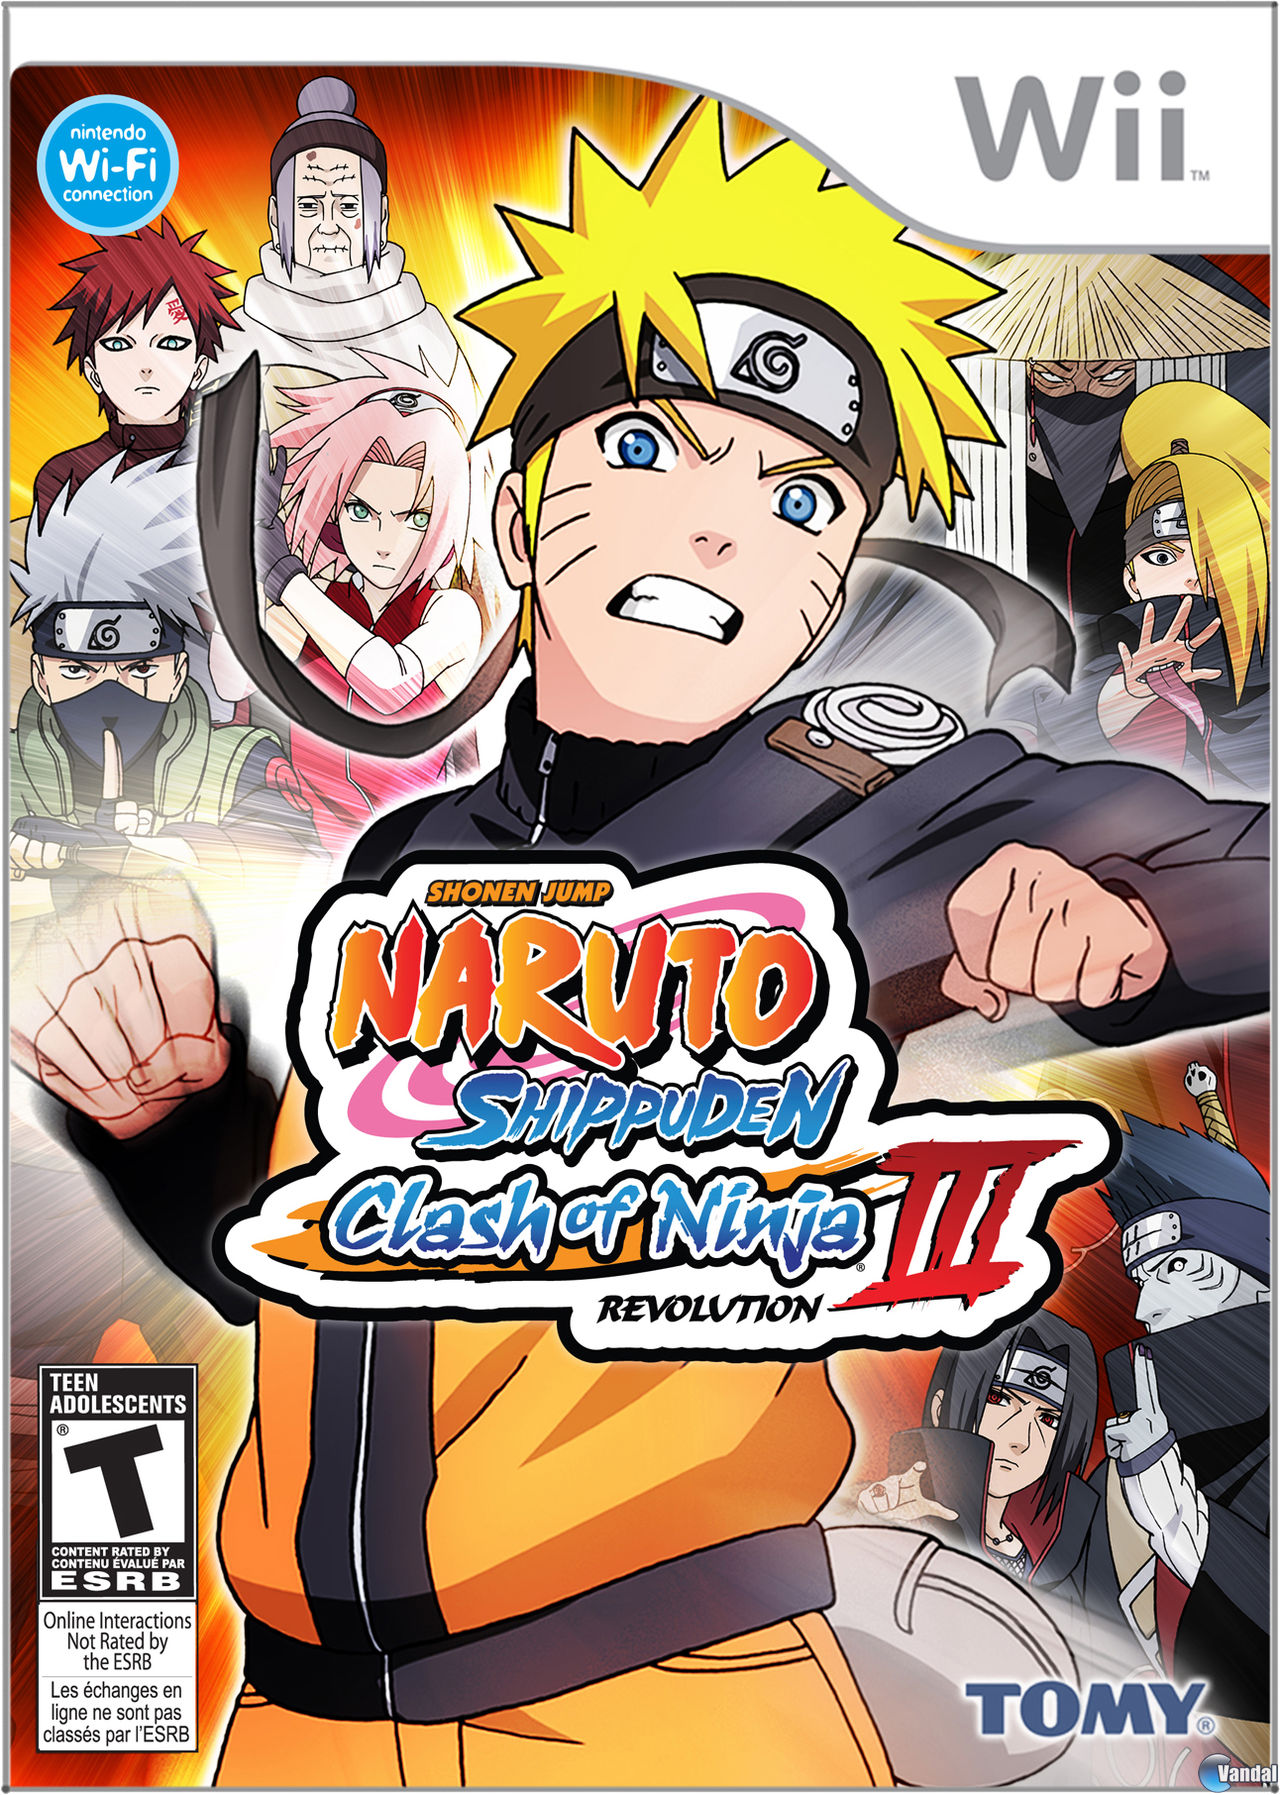 Trucos Naruto Shippuden: Clash of Ninja Revolution 3 - Wii ...